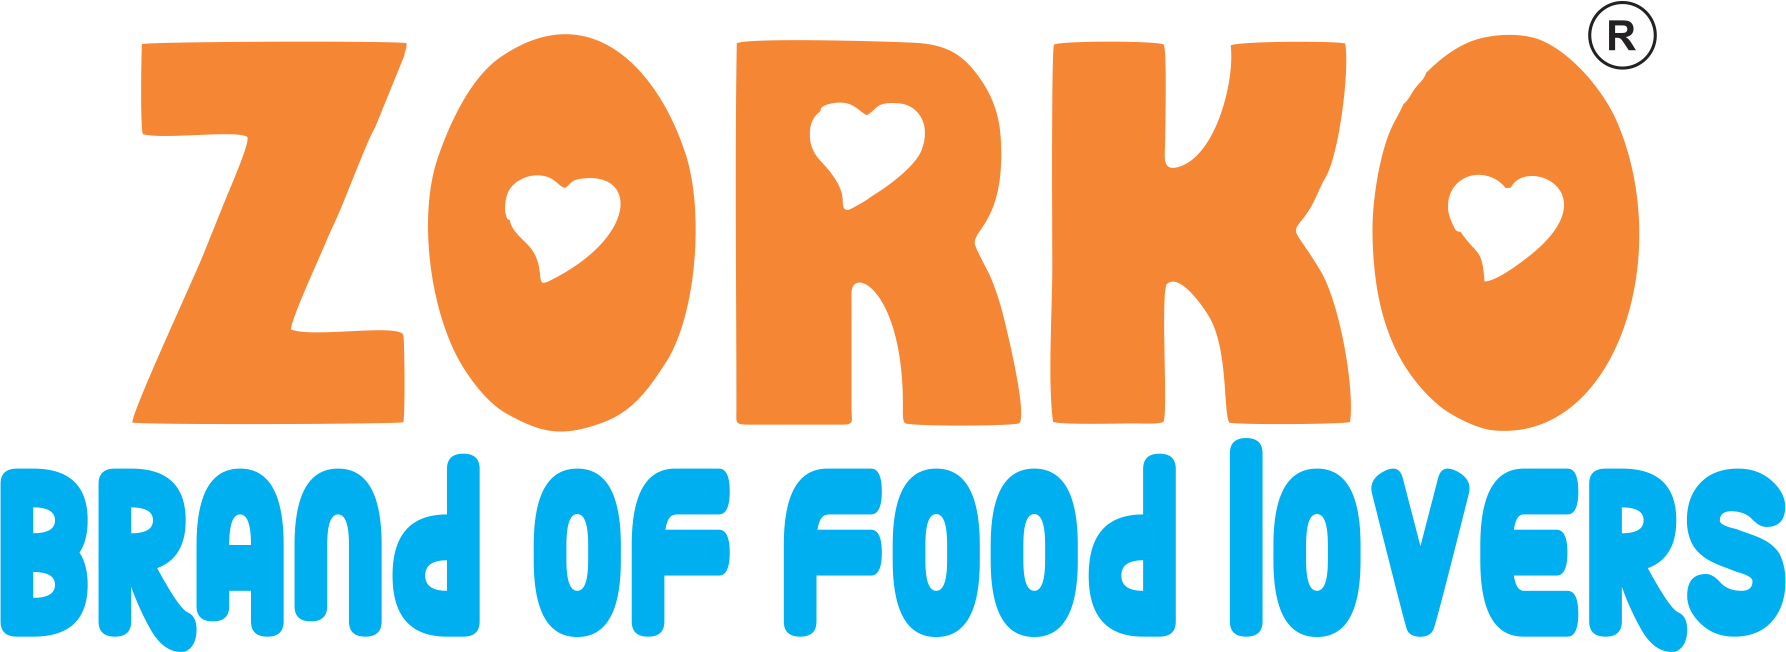 ZORKO, Brand of Food lovers 